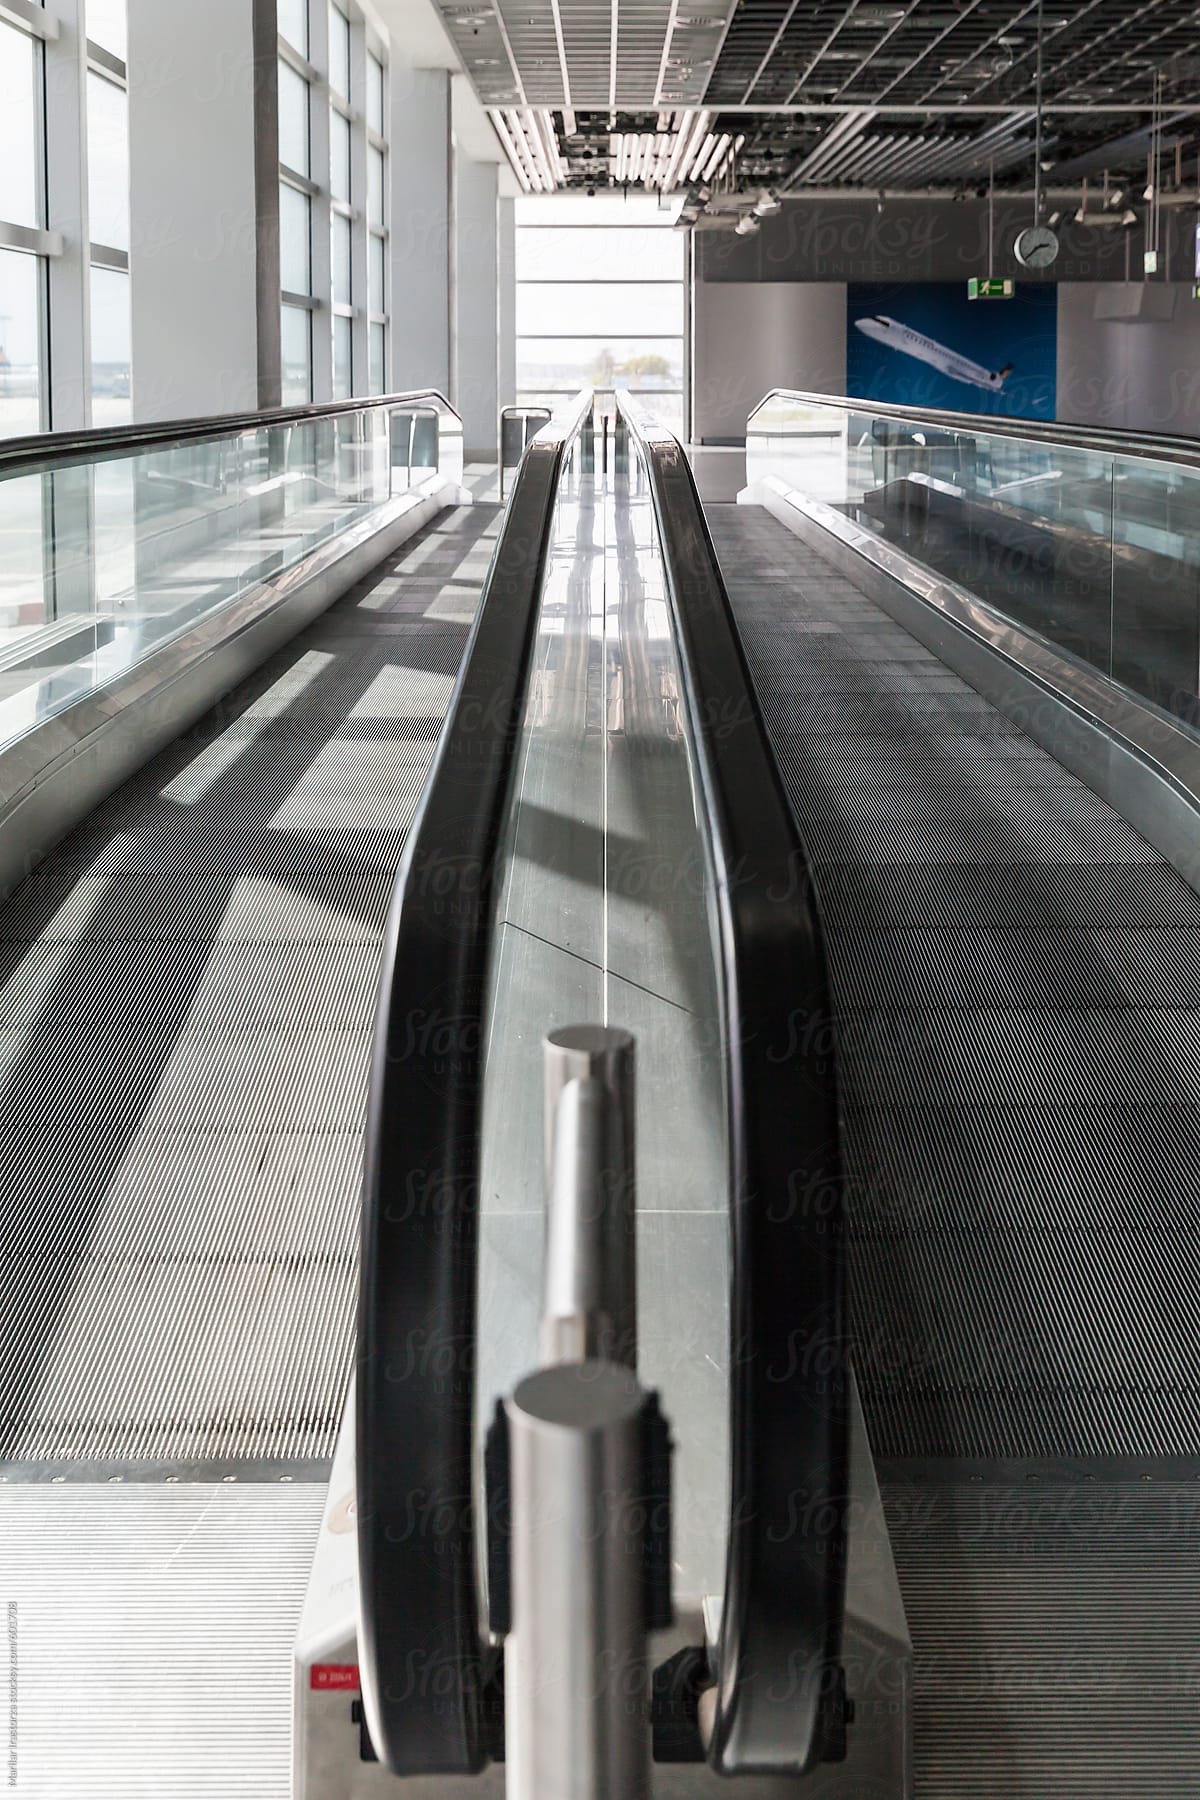 Moving walkway at an airport